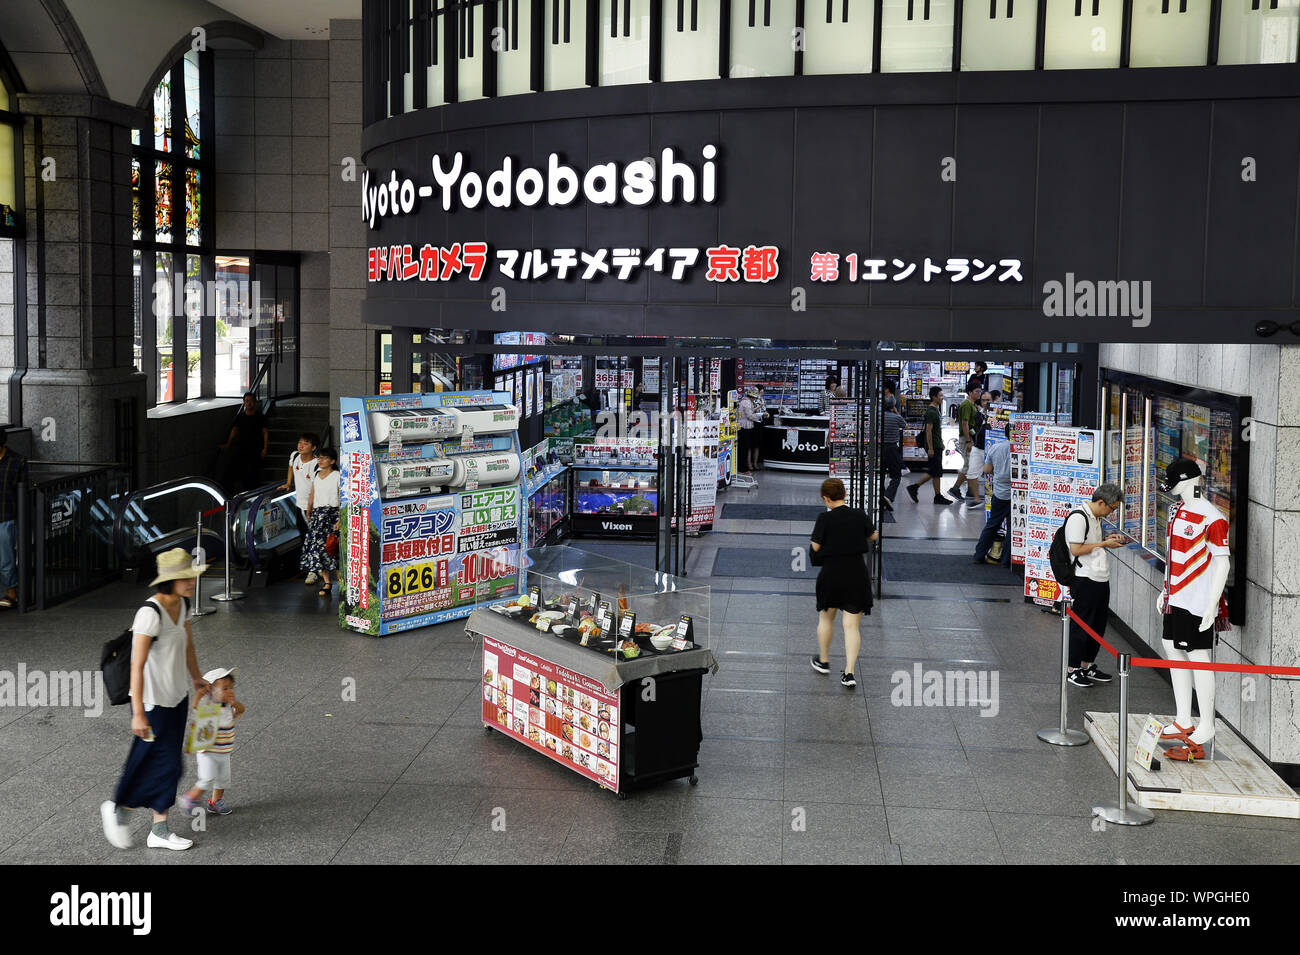 Kyoto Yodobashi - Kyoto - Japan Stock Photo - Alamy